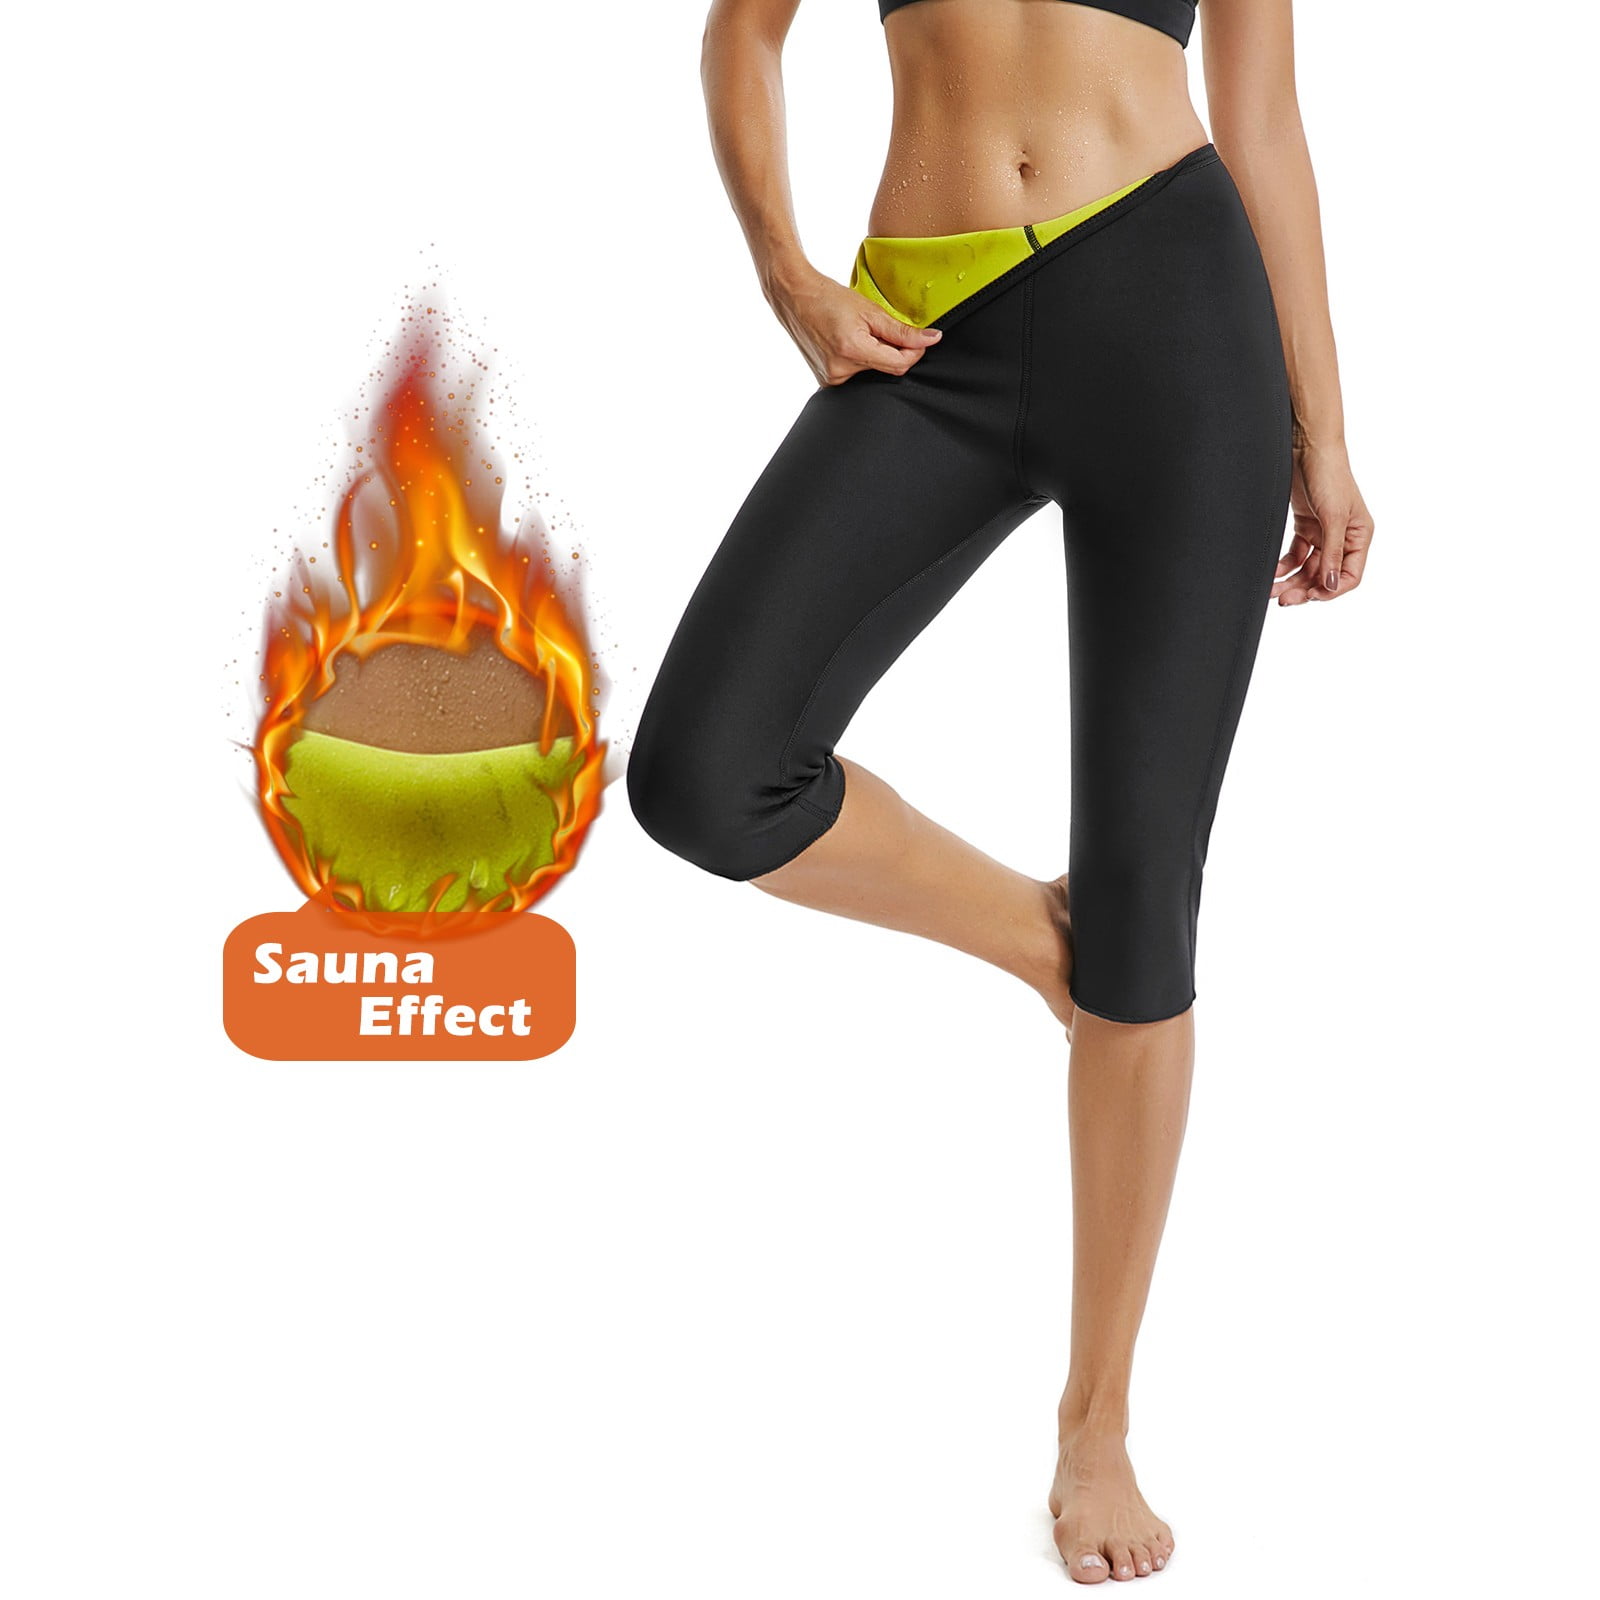 AVENBER Women Body Shaper Panties Tummy Control Yoga Sculpting Sleep Slimming Breathing Stovepipe Legging Socks